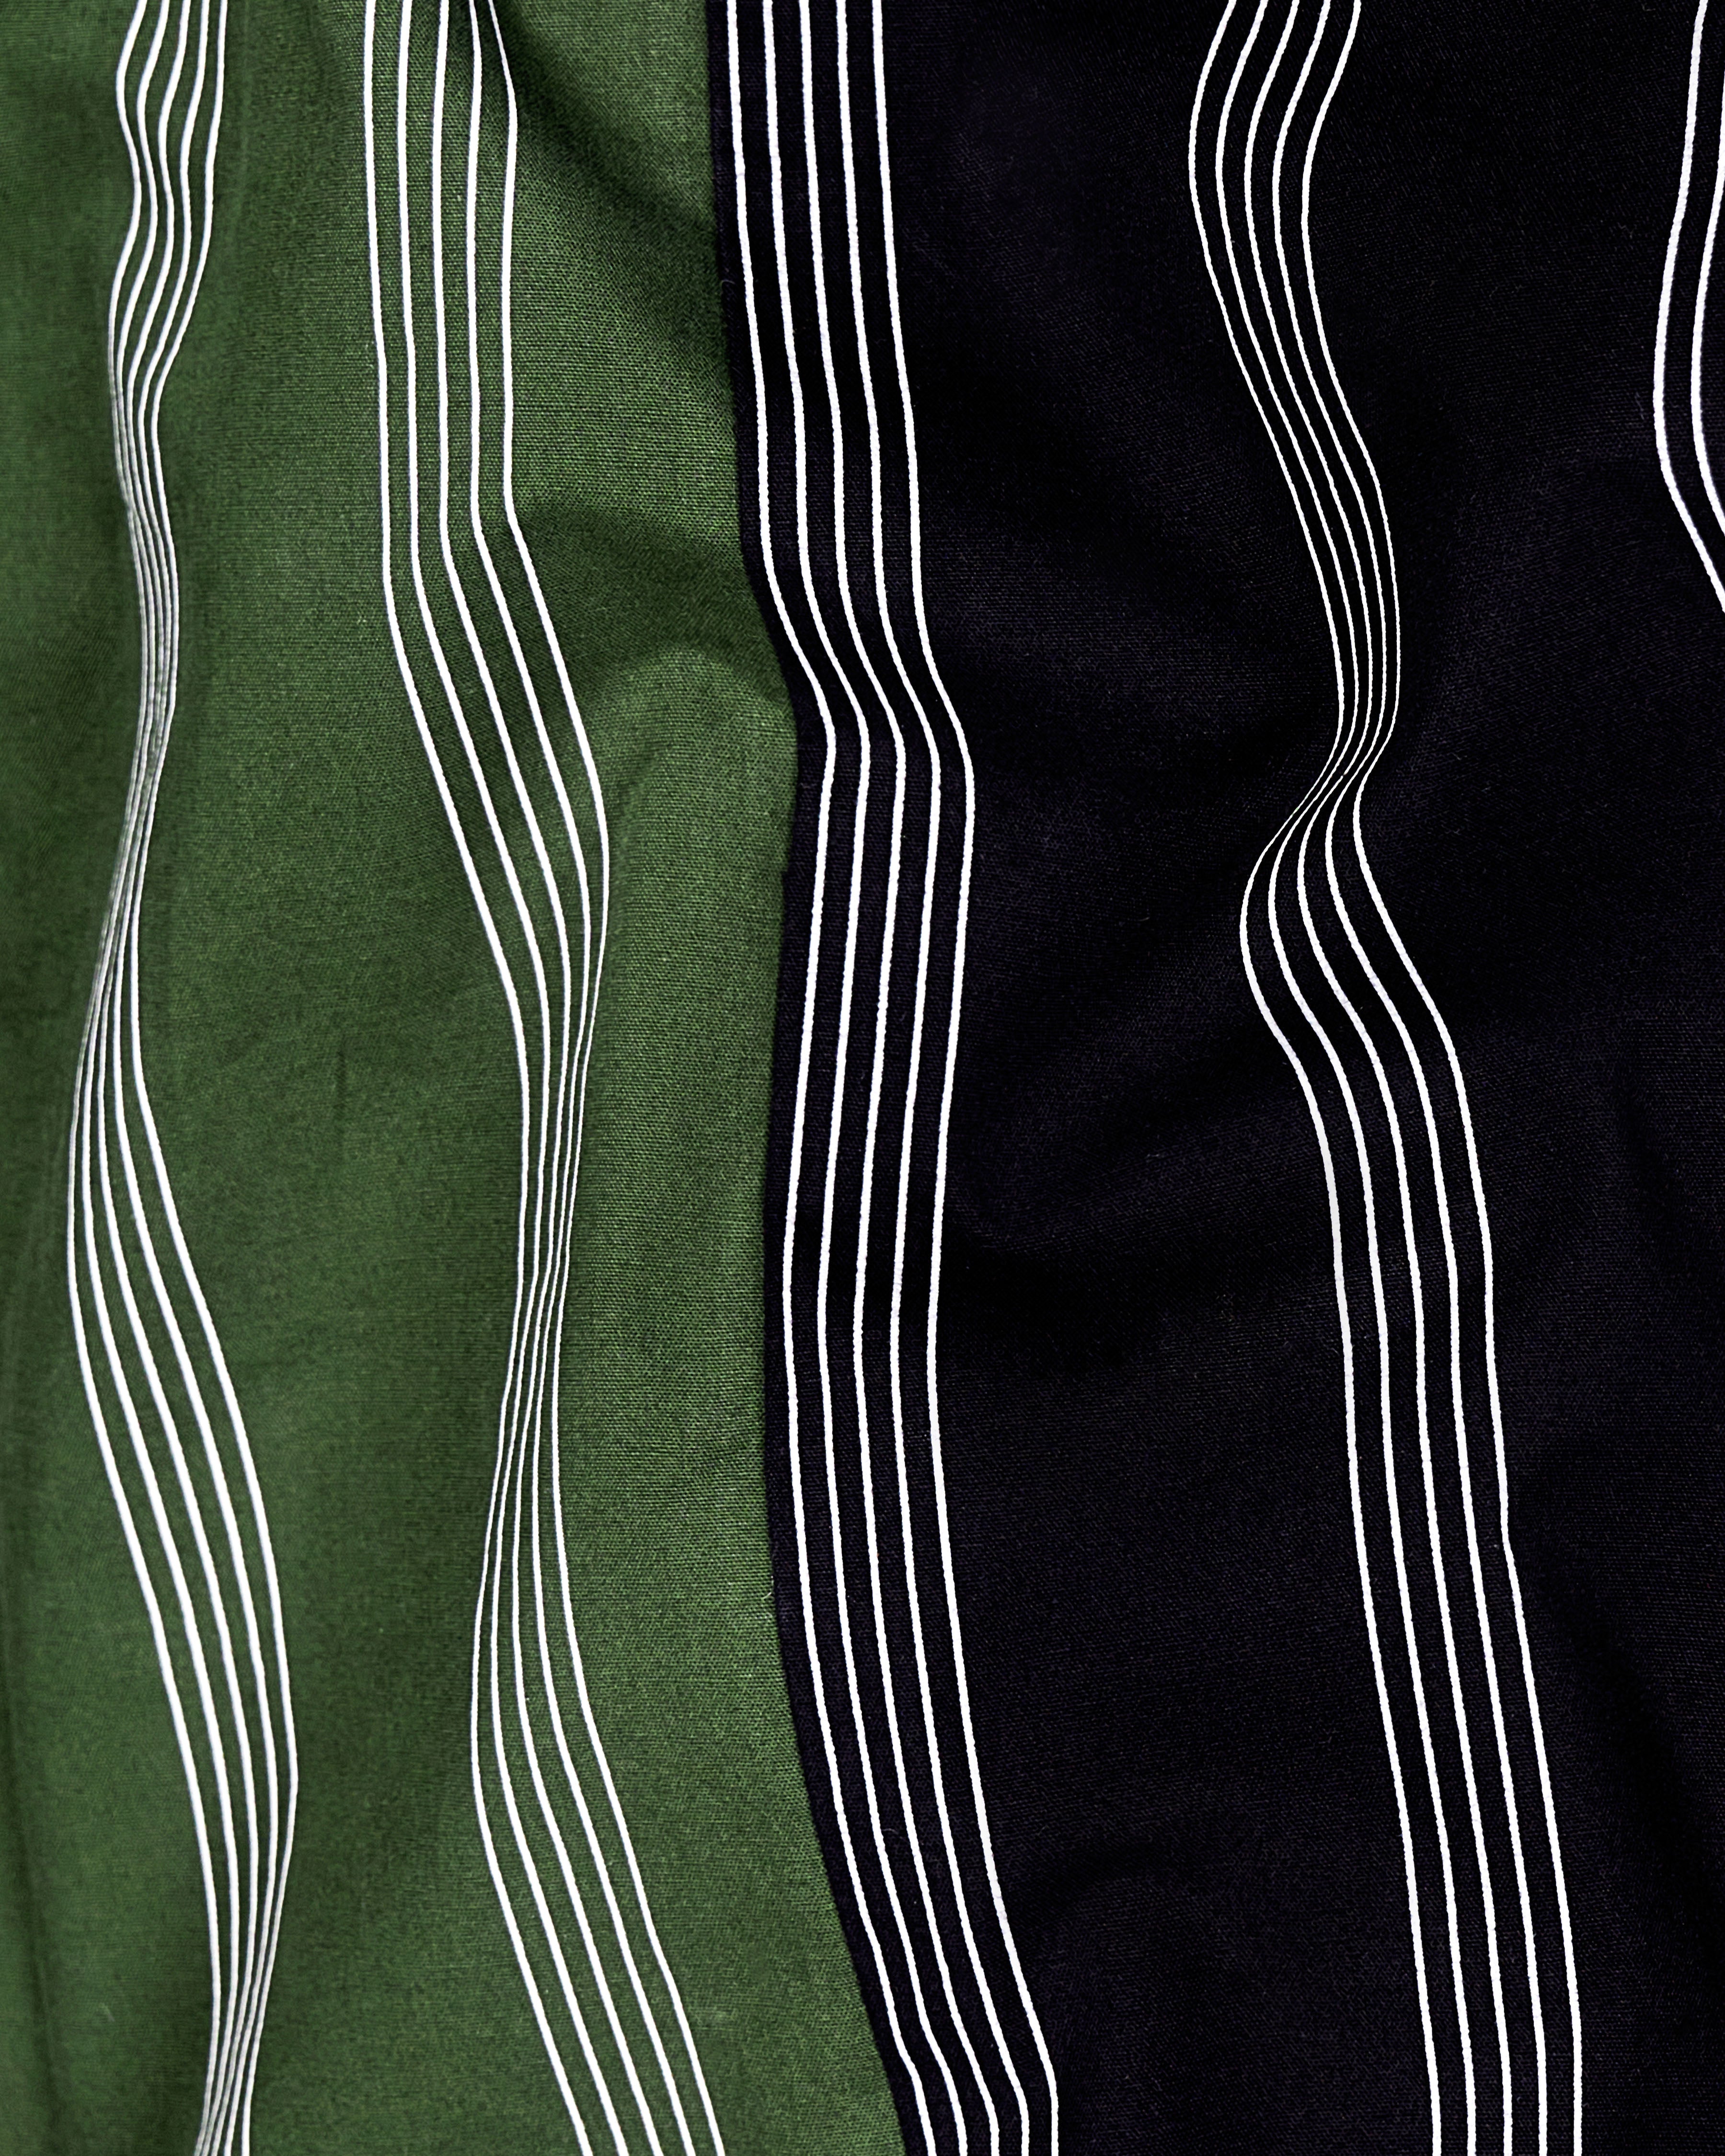 Taupe Green and Black Twill Pinstriped Premium Cotton Designer Shirt 9287-BLK-D22-38,9287-BLK-D22-H-38,9287-BLK-D22-39,9287-BLK-D22-H-39,9287-BLK-D22-40,9287-BLK-D22-H-40,9287-BLK-D22-42,9287-BLK-D22-H-42,9287-BLK-D22-44,9287-BLK-D22-H-44,9287-BLK-D22-46,9287-BLK-D22-H-46,9287-BLK-D22-48,9287-BLK-D22-H-48,9287-BLK-D22-50,9287-BLK-D22-H-50,9287-BLK-D22-52,9287-BLK-D22-H-52